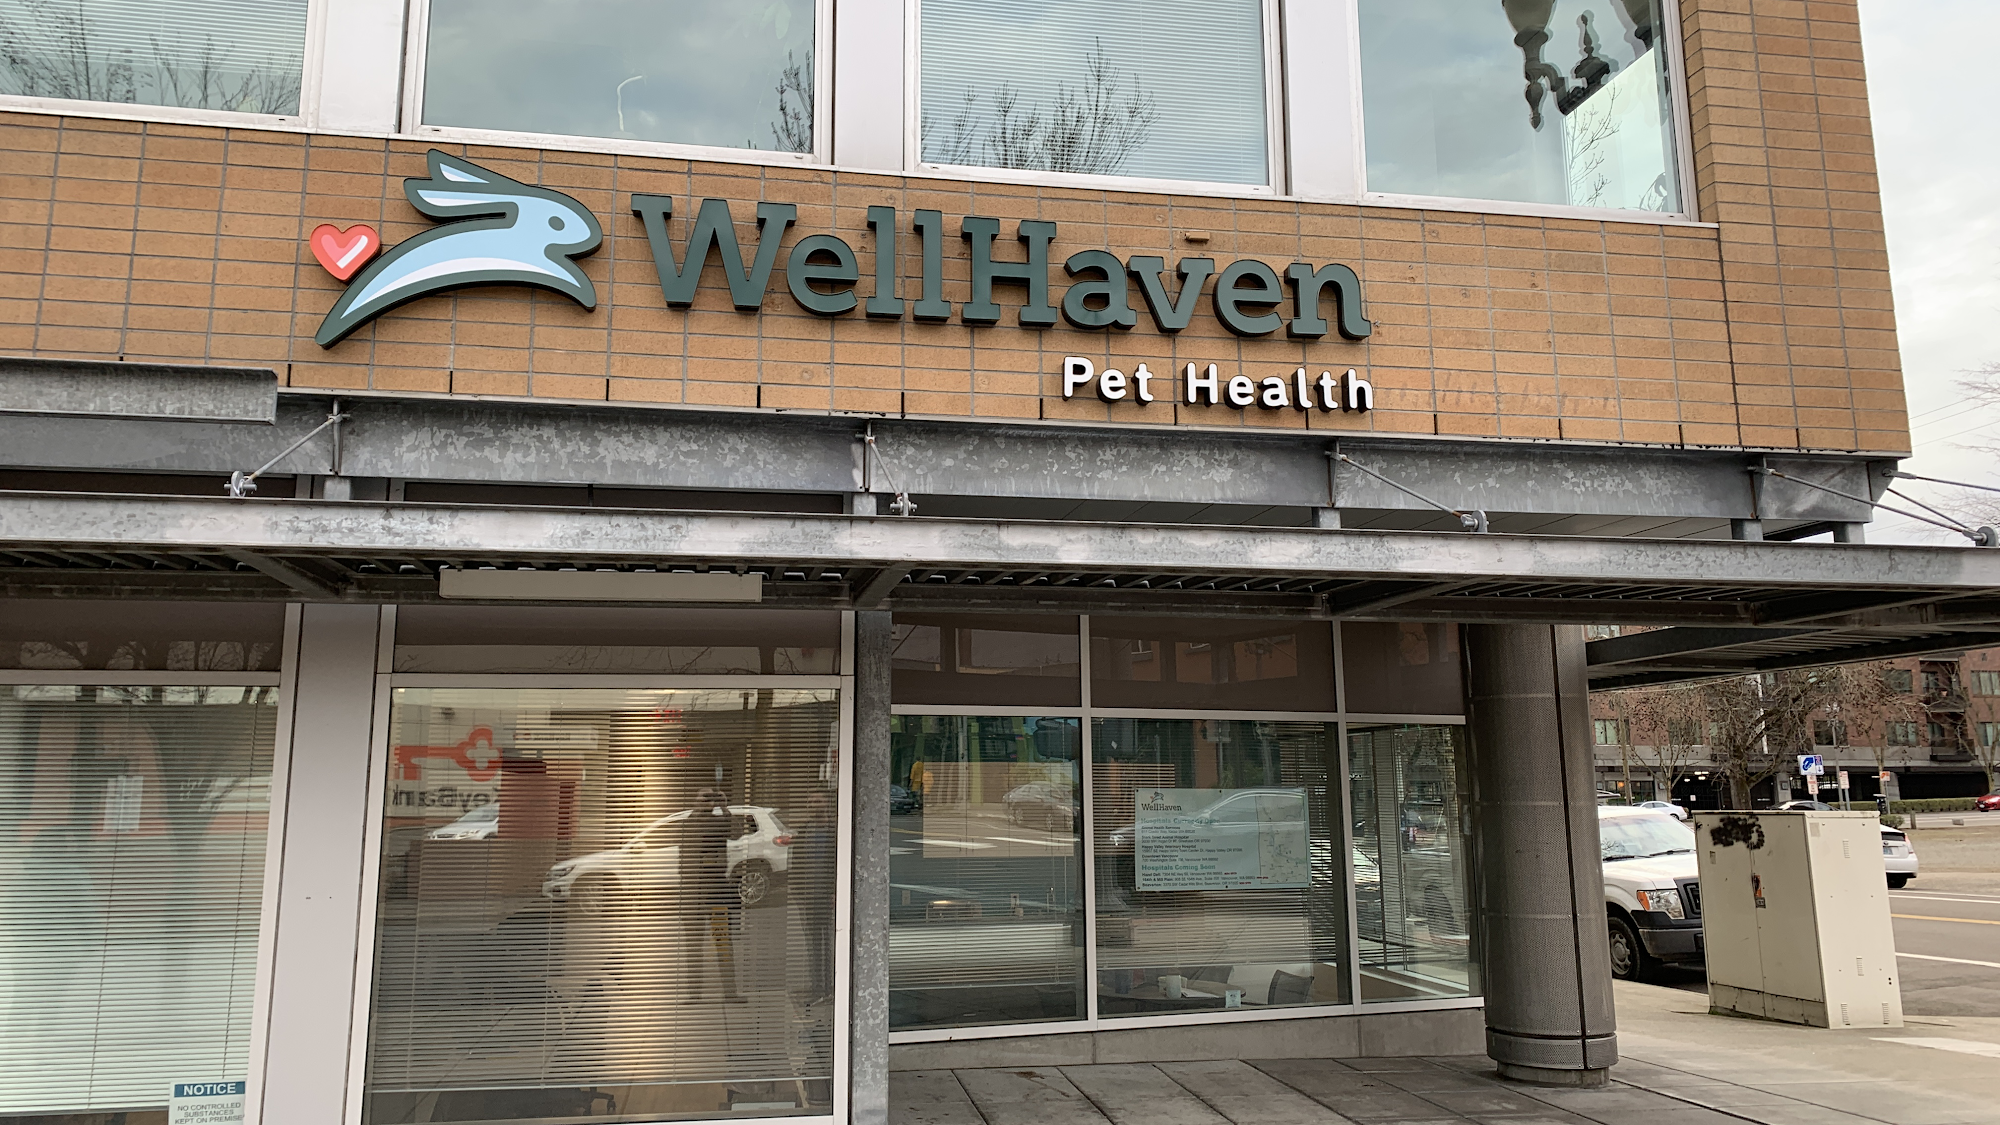 WellHaven Pet Health